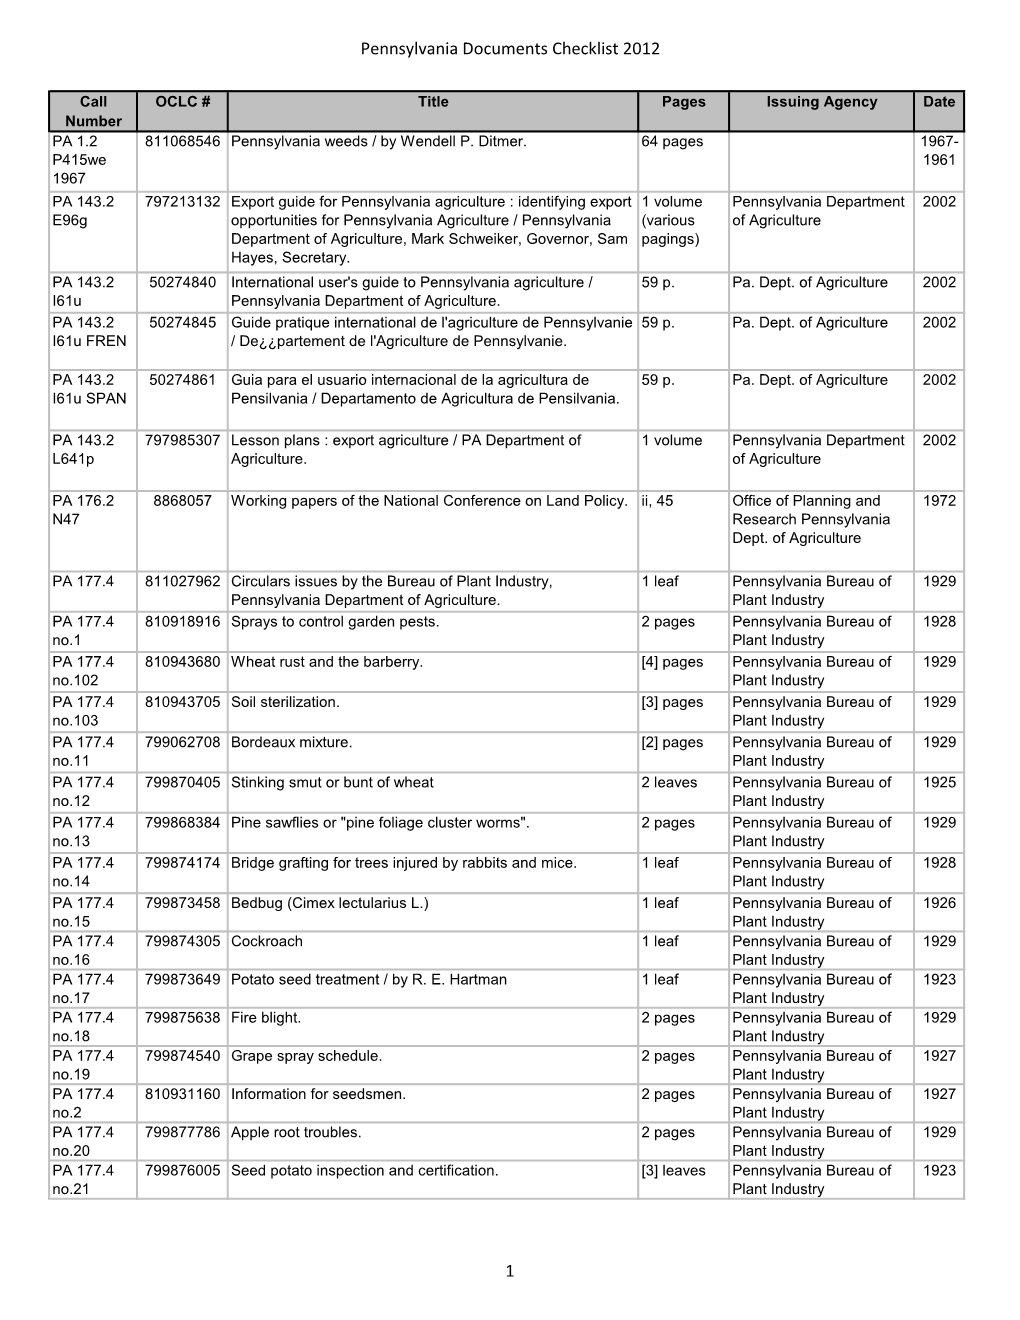 Pennsylvania Documents Checklist 2012 1